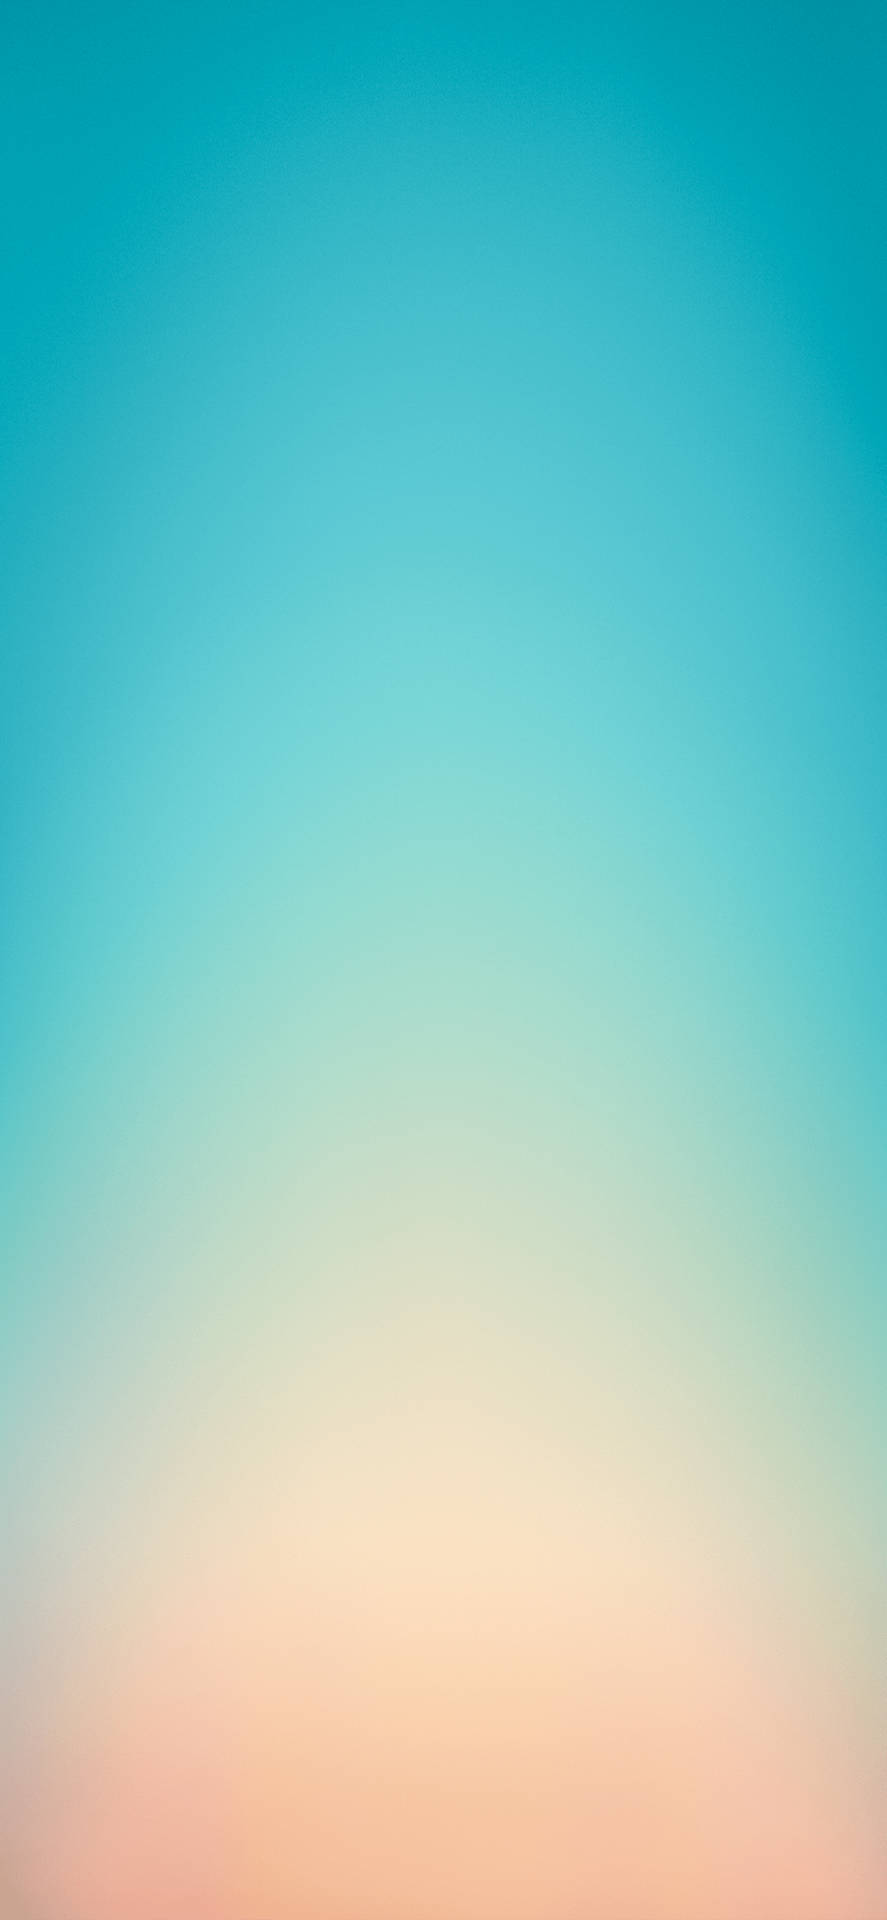 Apple Iphone Default Blue Orange Gradient Wallpaper